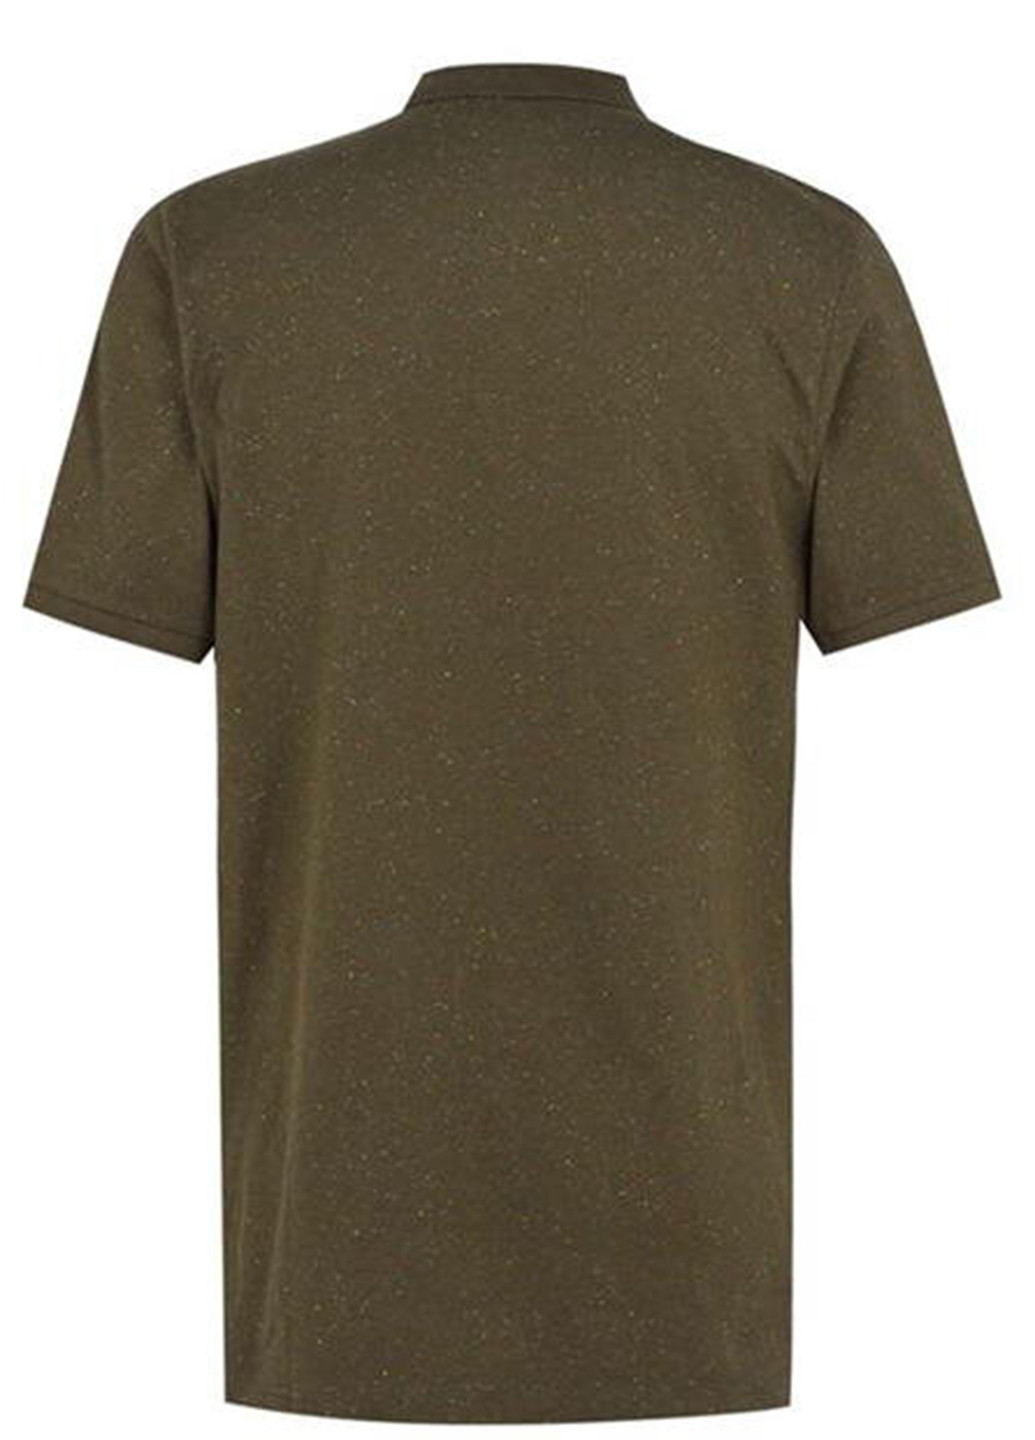 Оливковая (хаки) футболка-поло для мужчин Soulcal & Co с узором «перец с солью»